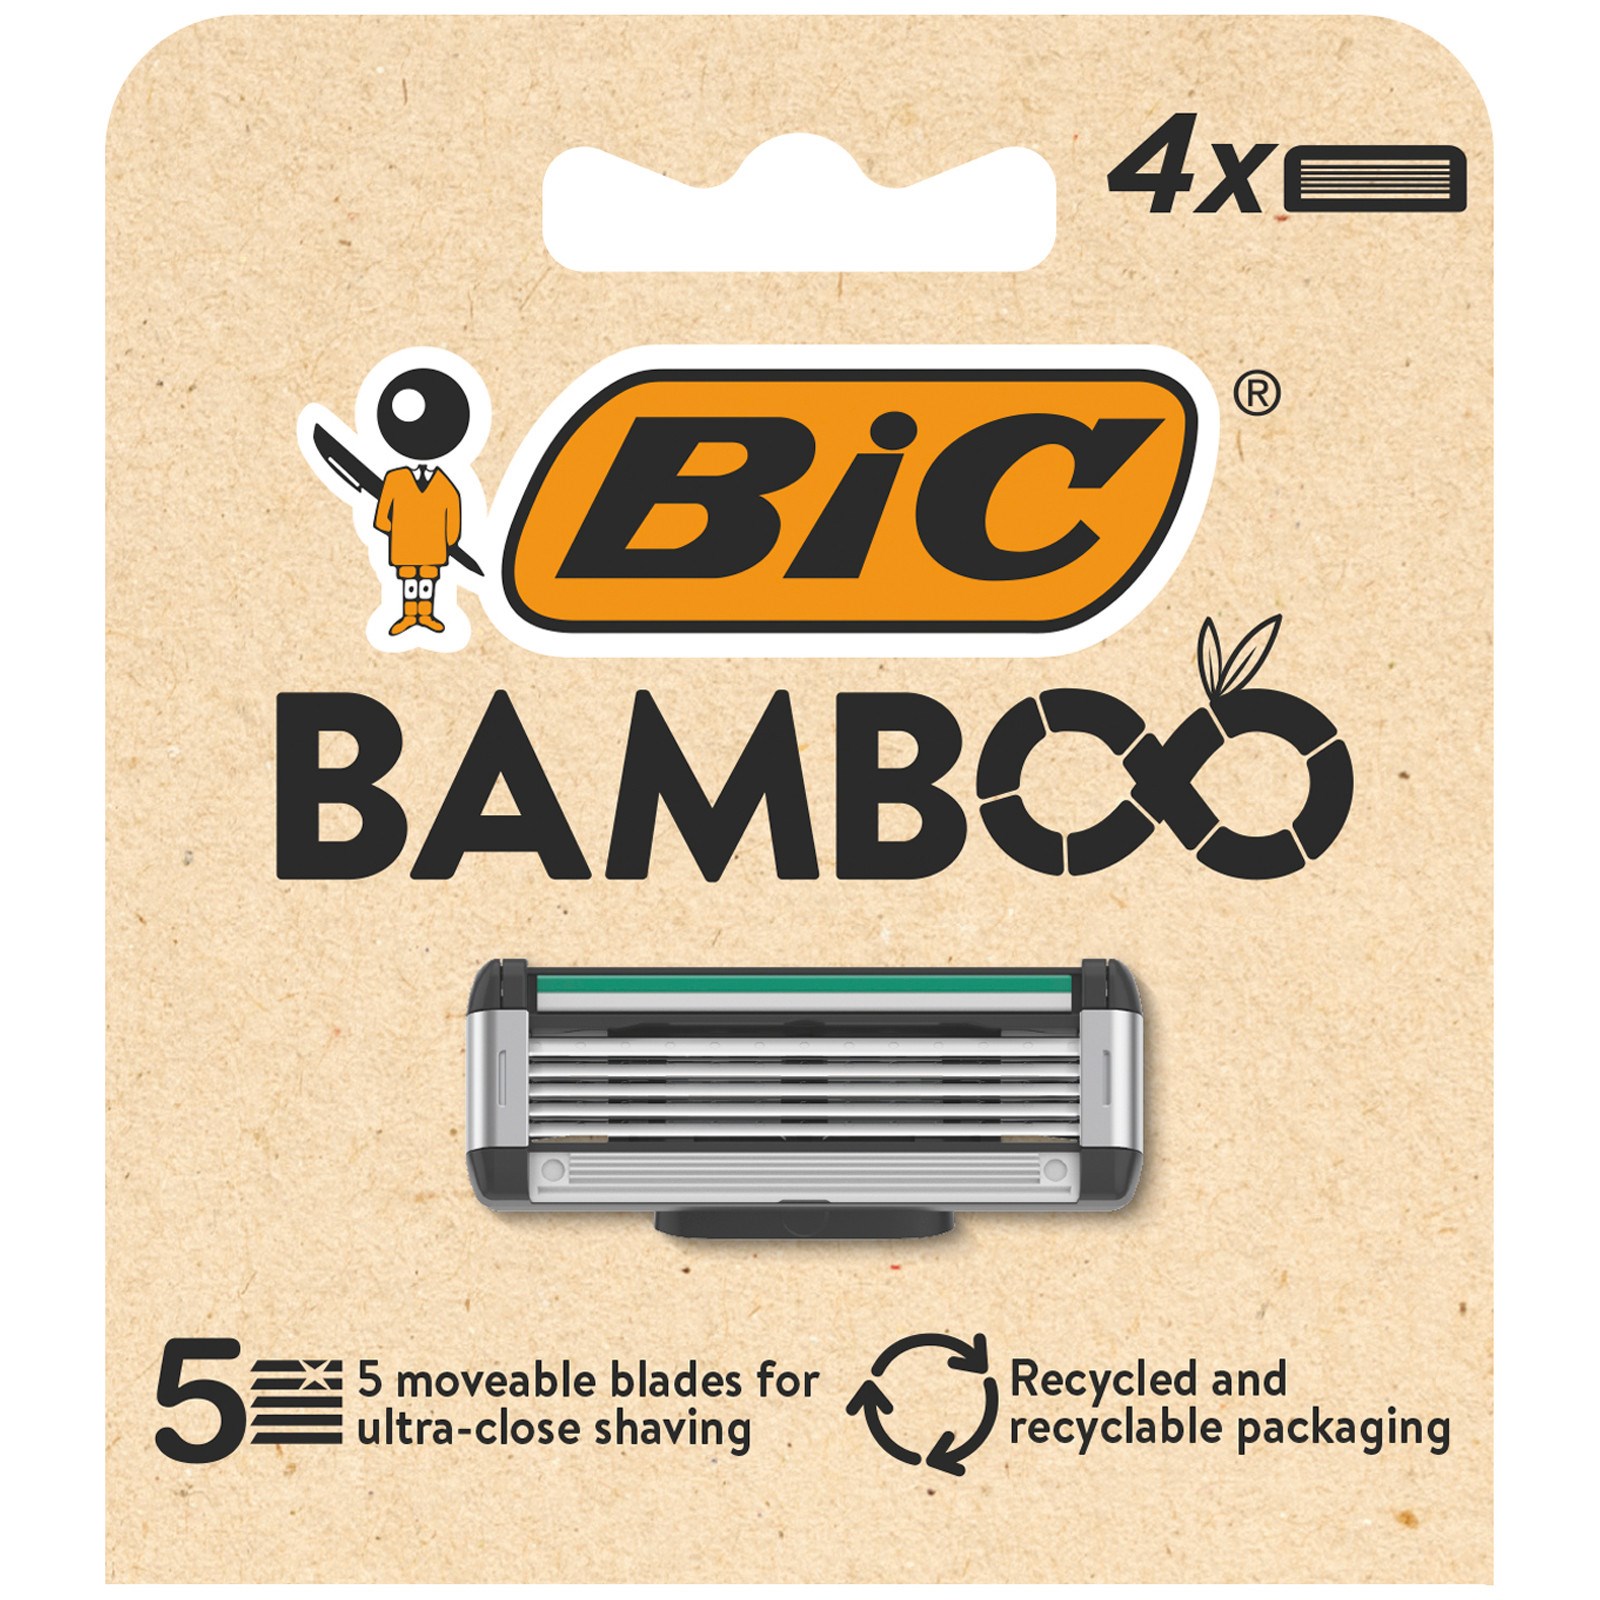 BIC Bamboo Rakblad